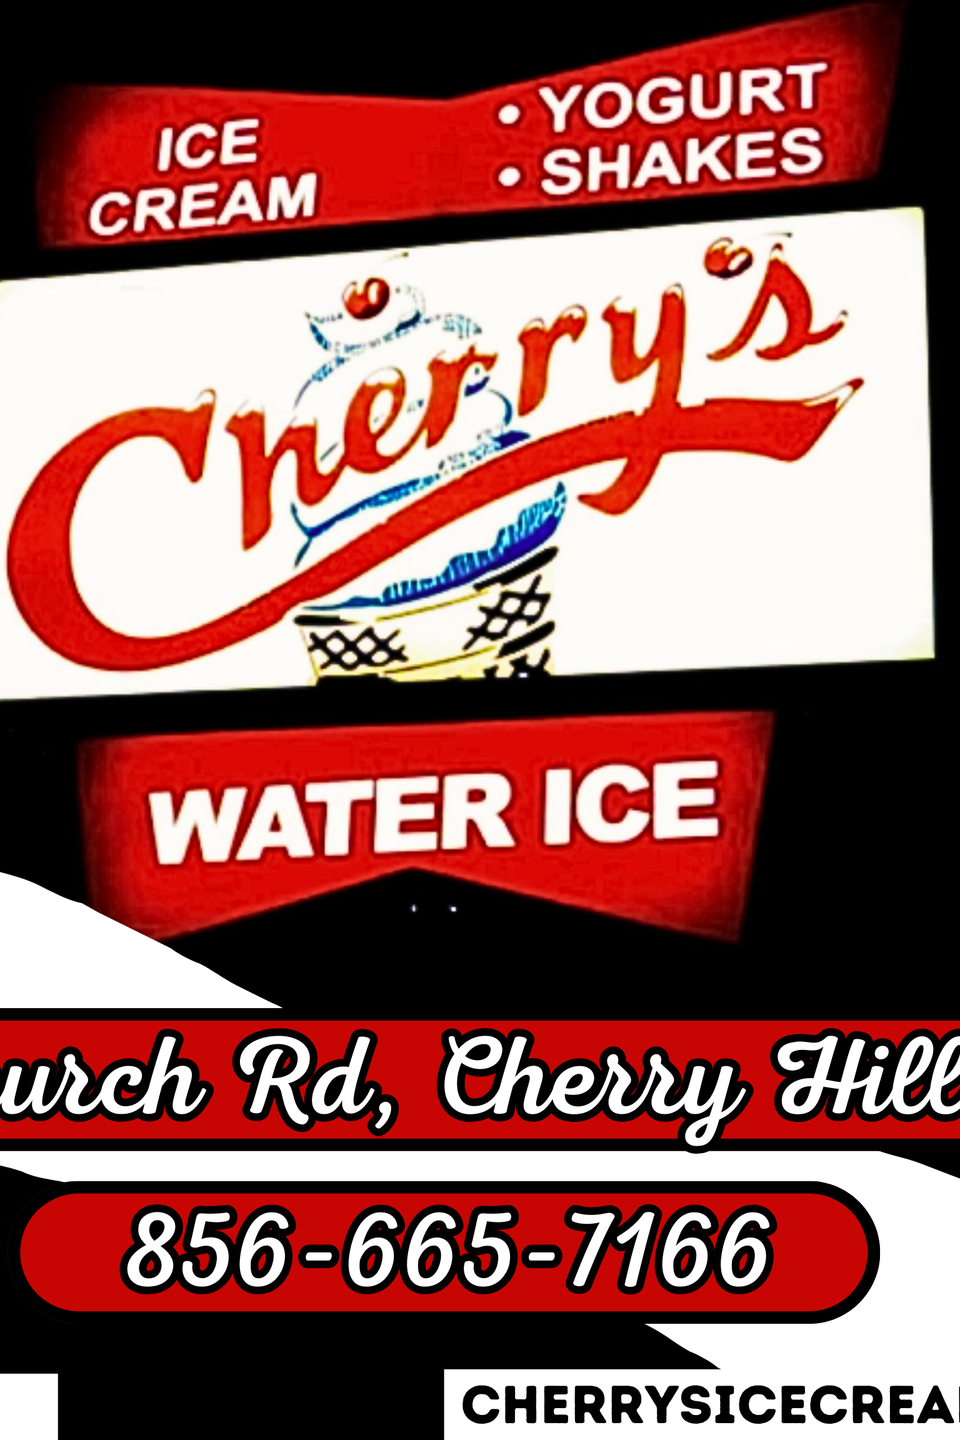 Cherry's national banner